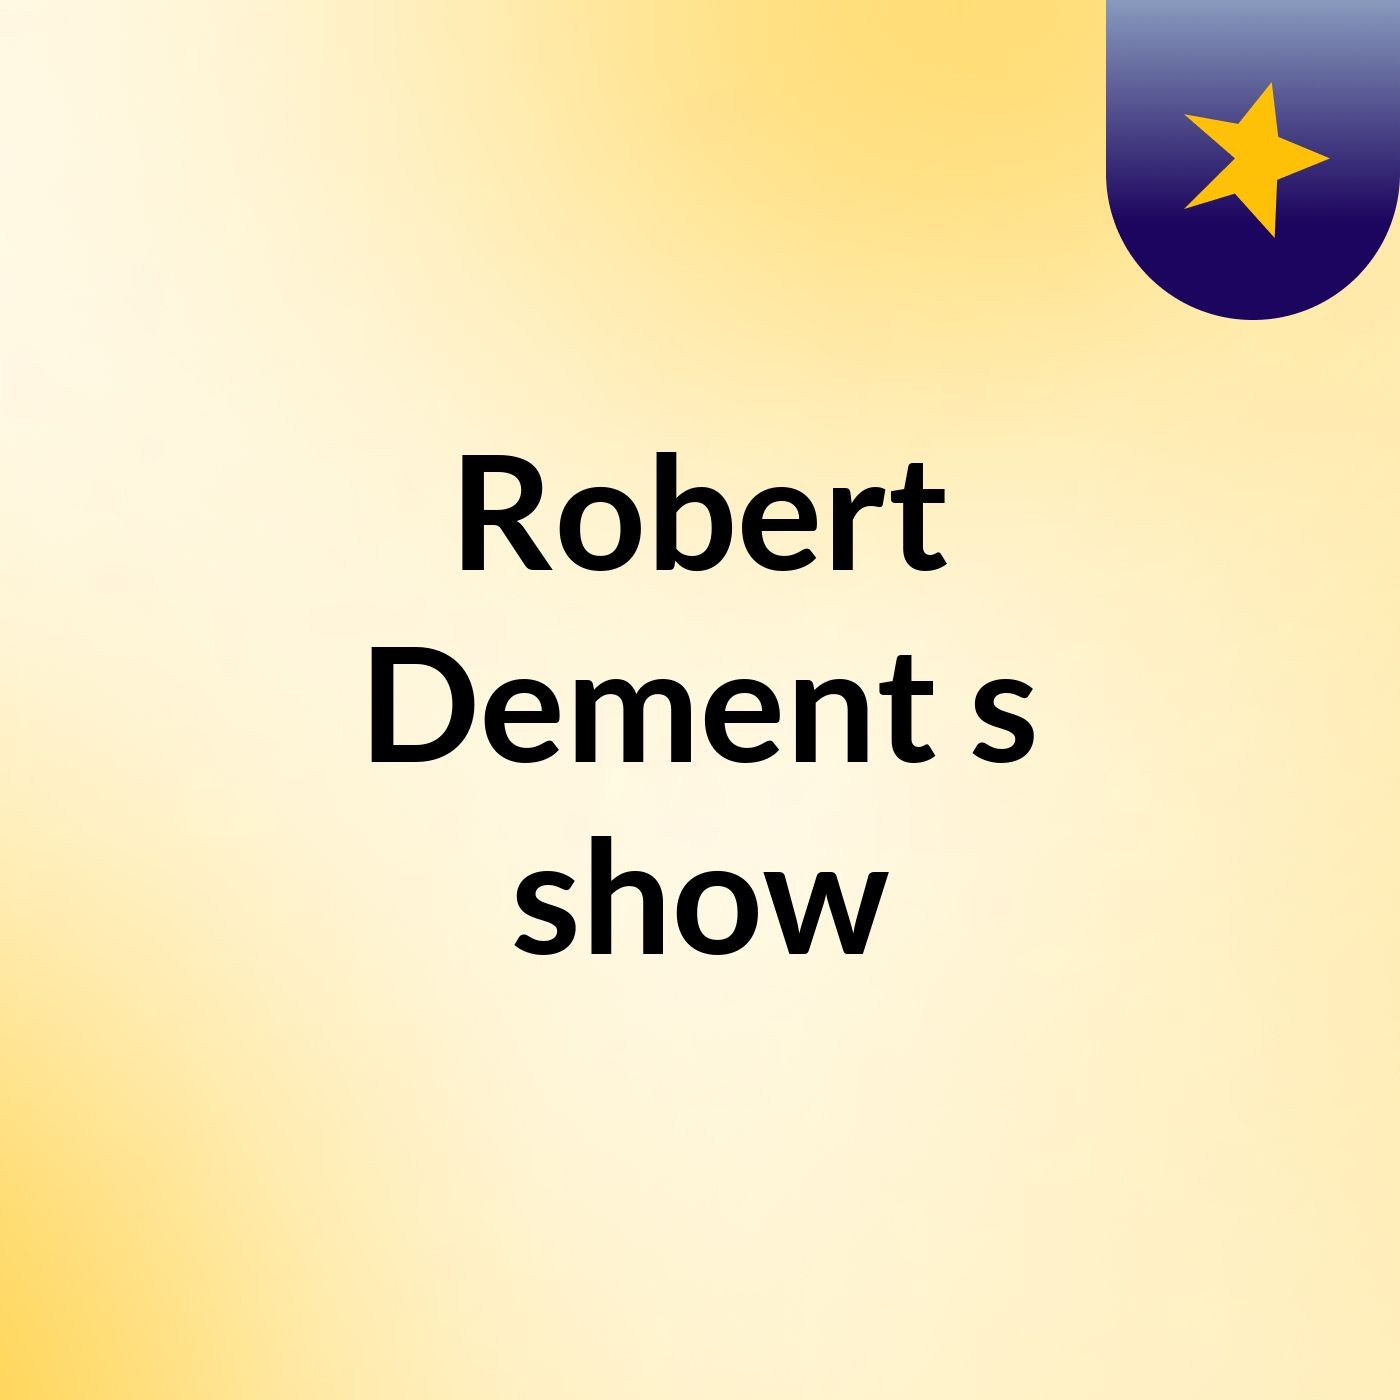 Robert Dement's show